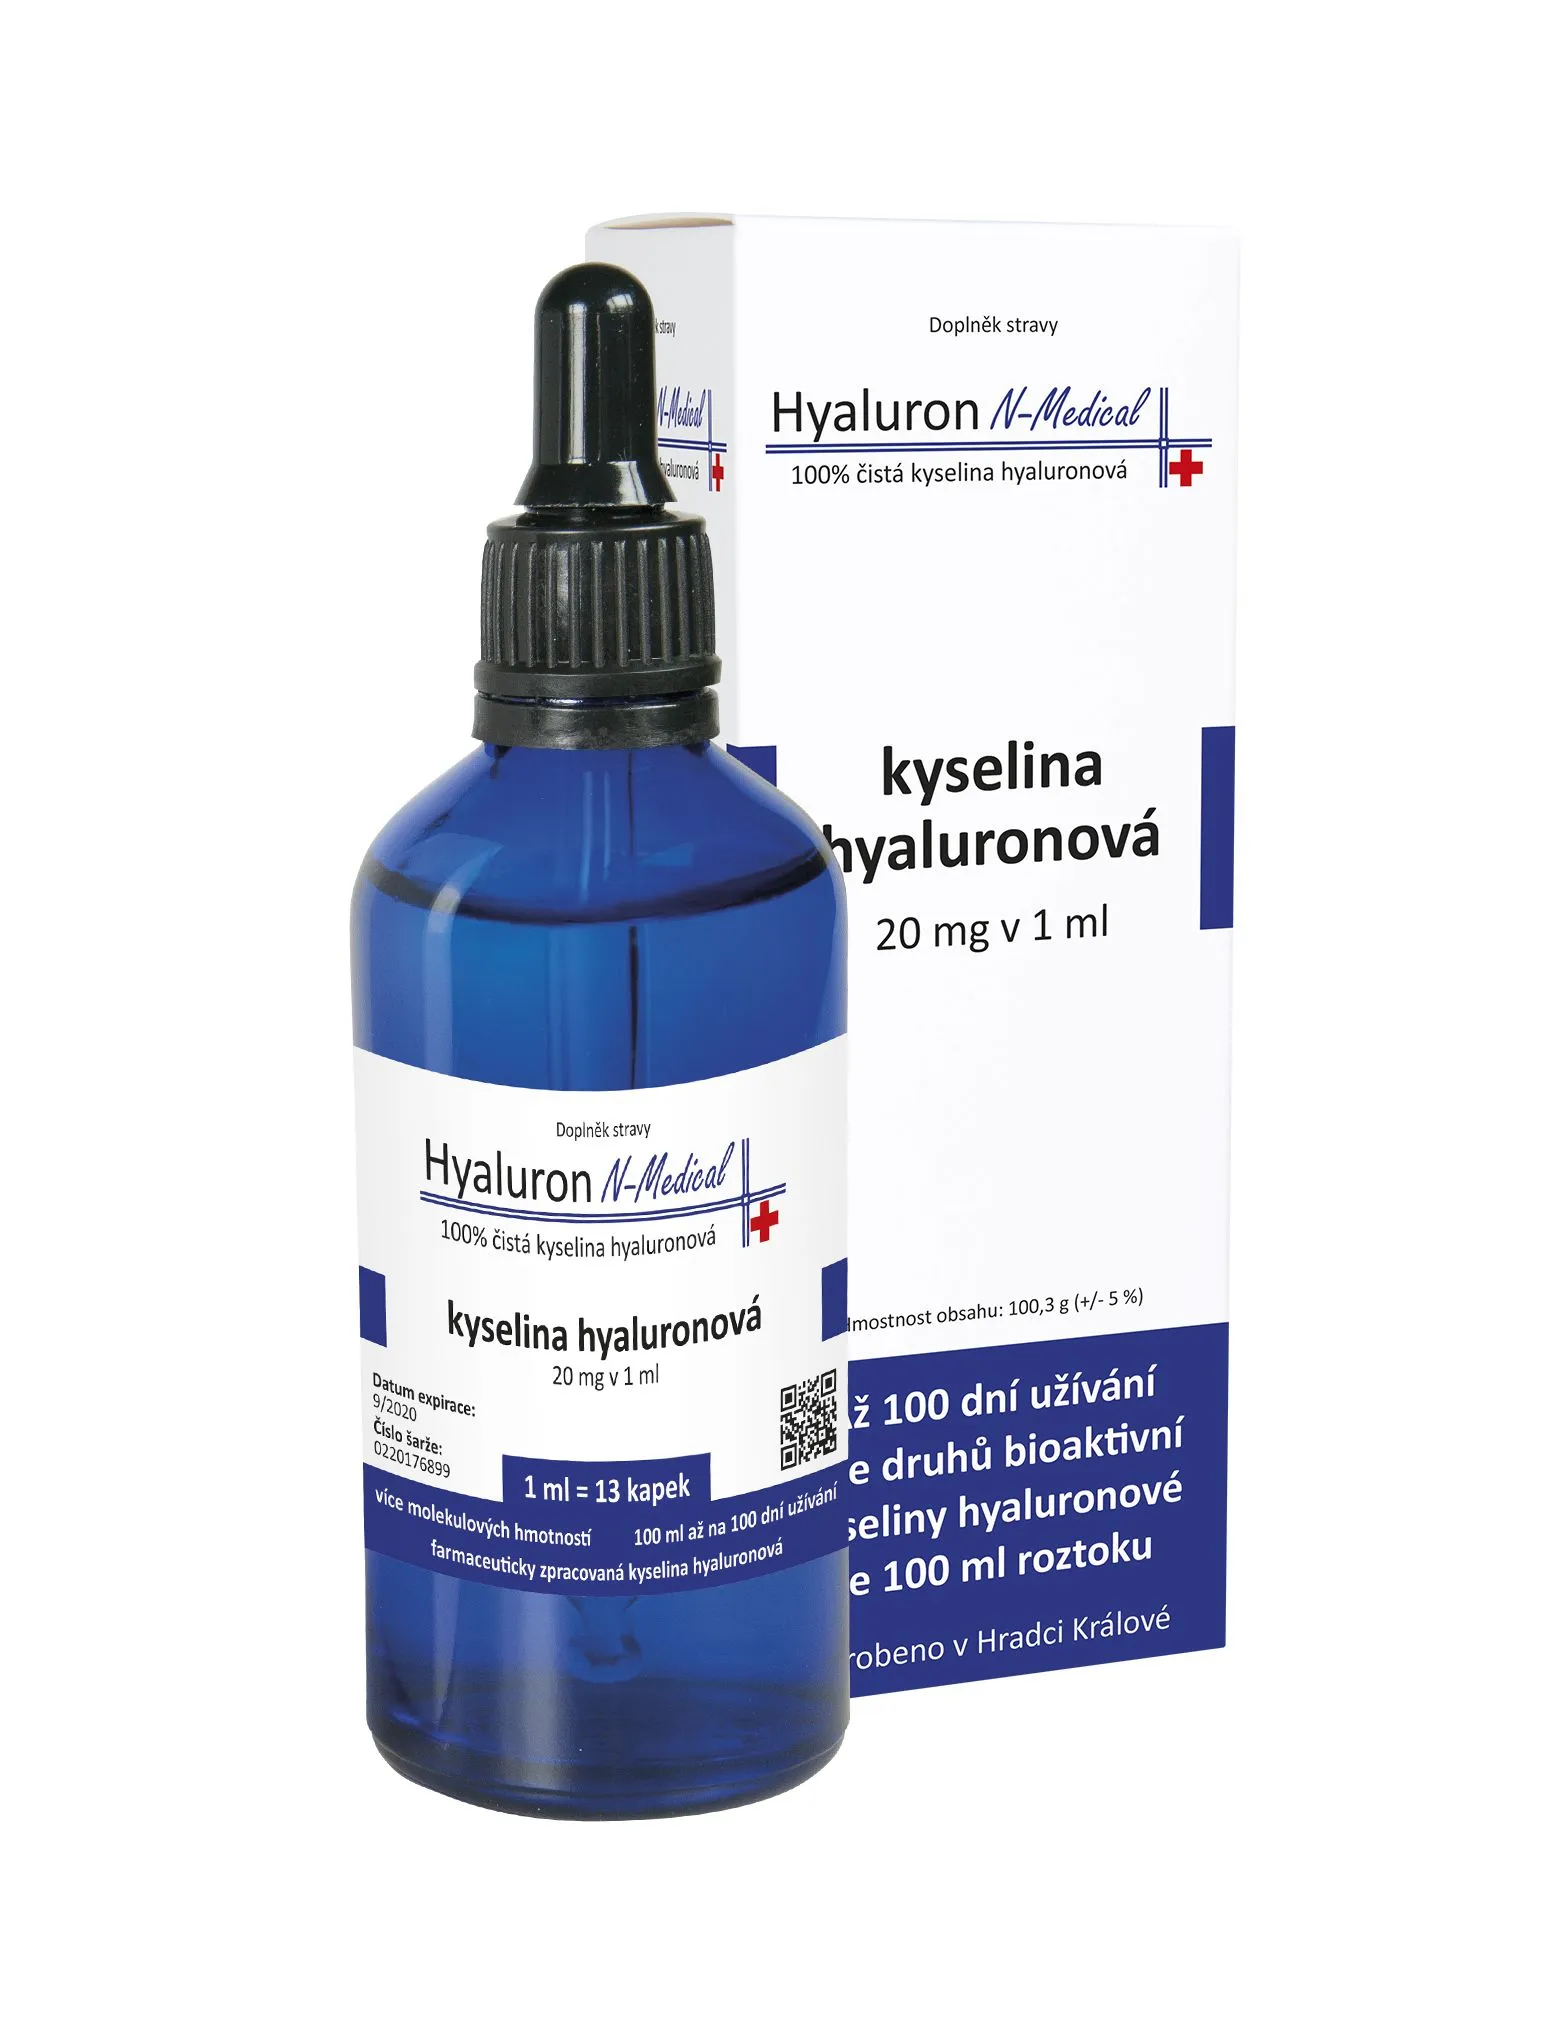 N-Medical Hyaluron 100% kyselina hyaluronová 100 ml